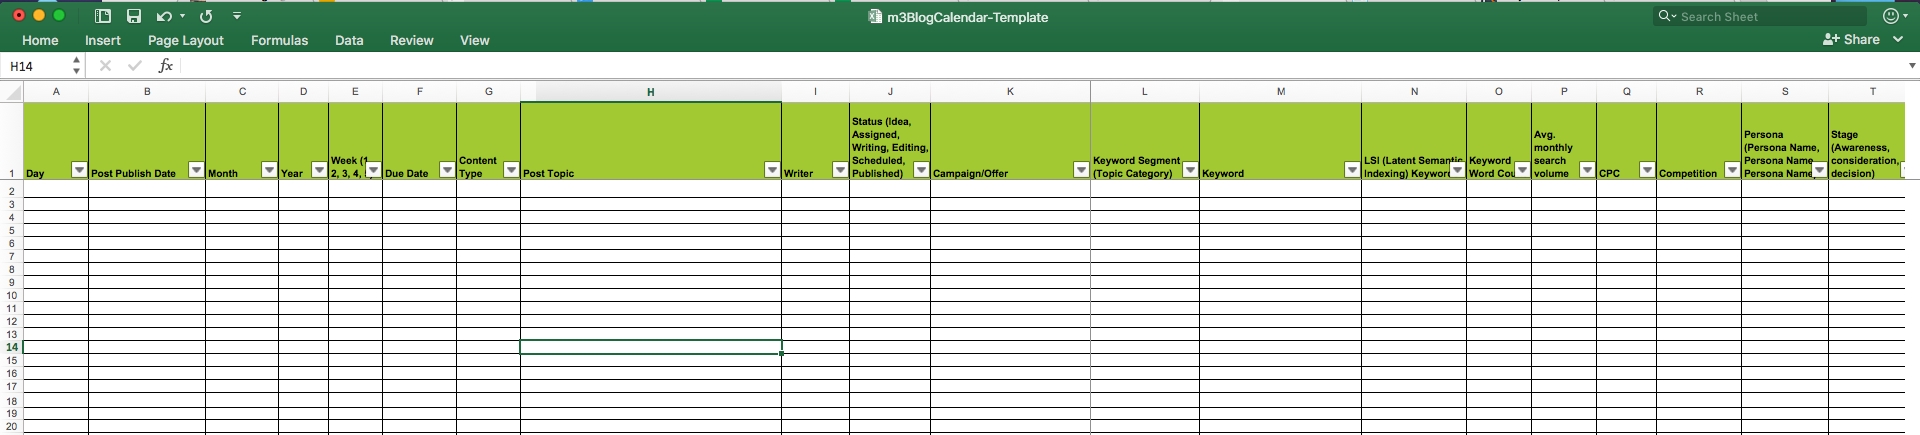 Editorial Calendar Templates For Content Marketing: The Marketing Calendar Template Xls